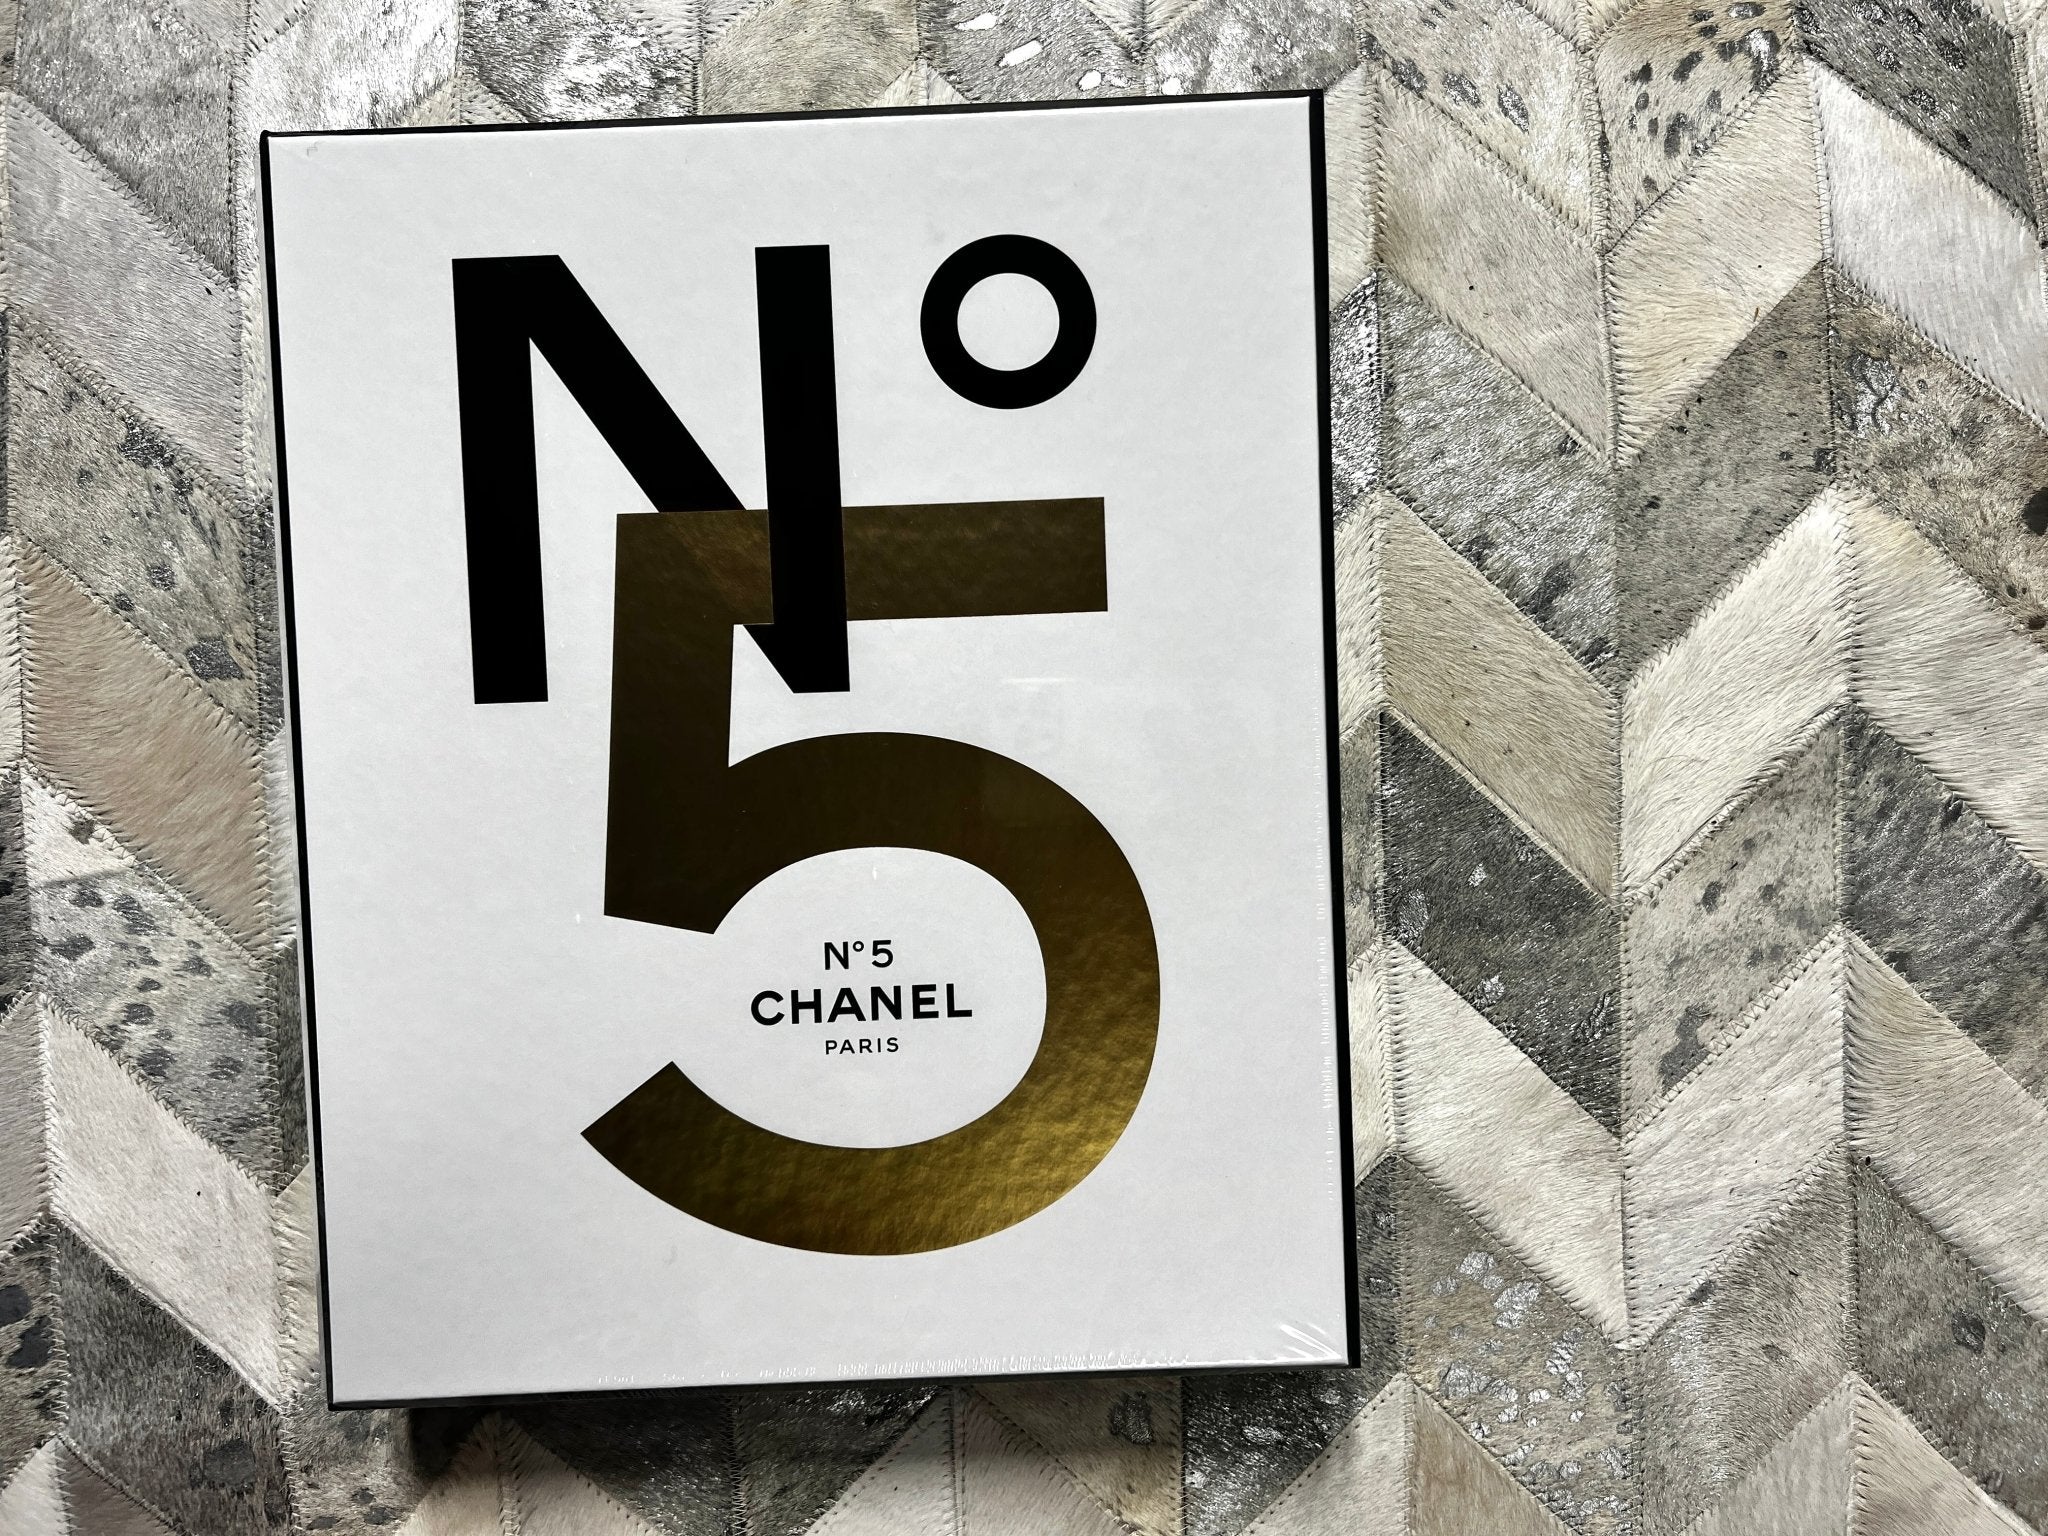 10 BOOKS Color Designer Book Set, Chanel, Tom Ford, Louis Vuitton